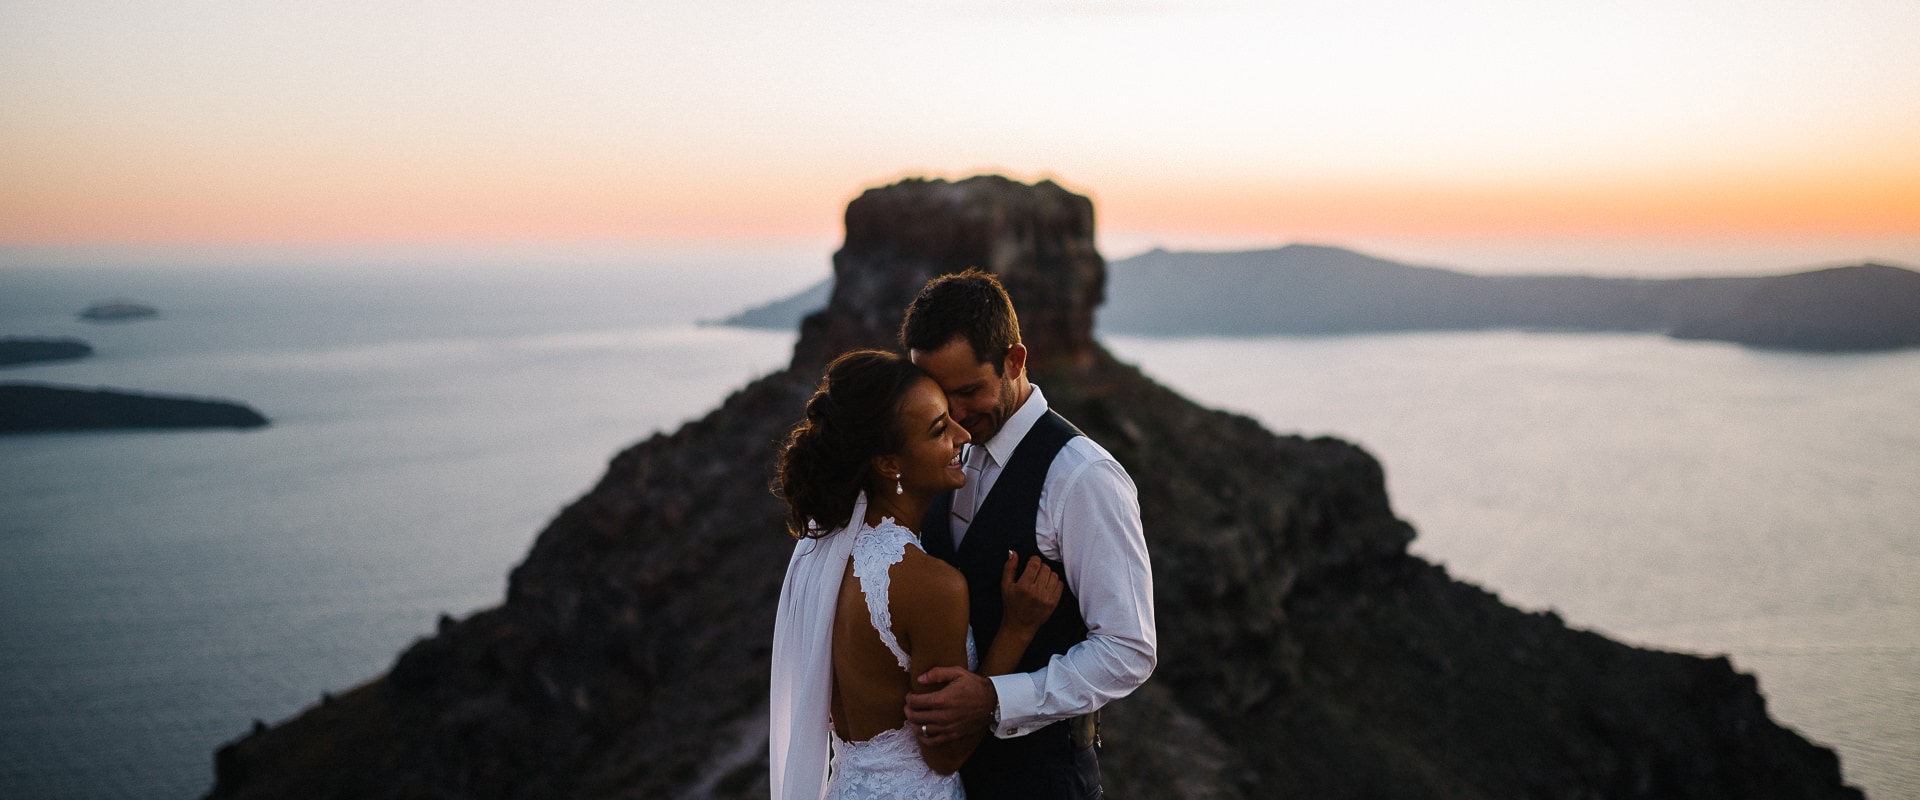 Santorini Elopements – Mitch & Eva’s romantic elopement in Santorini